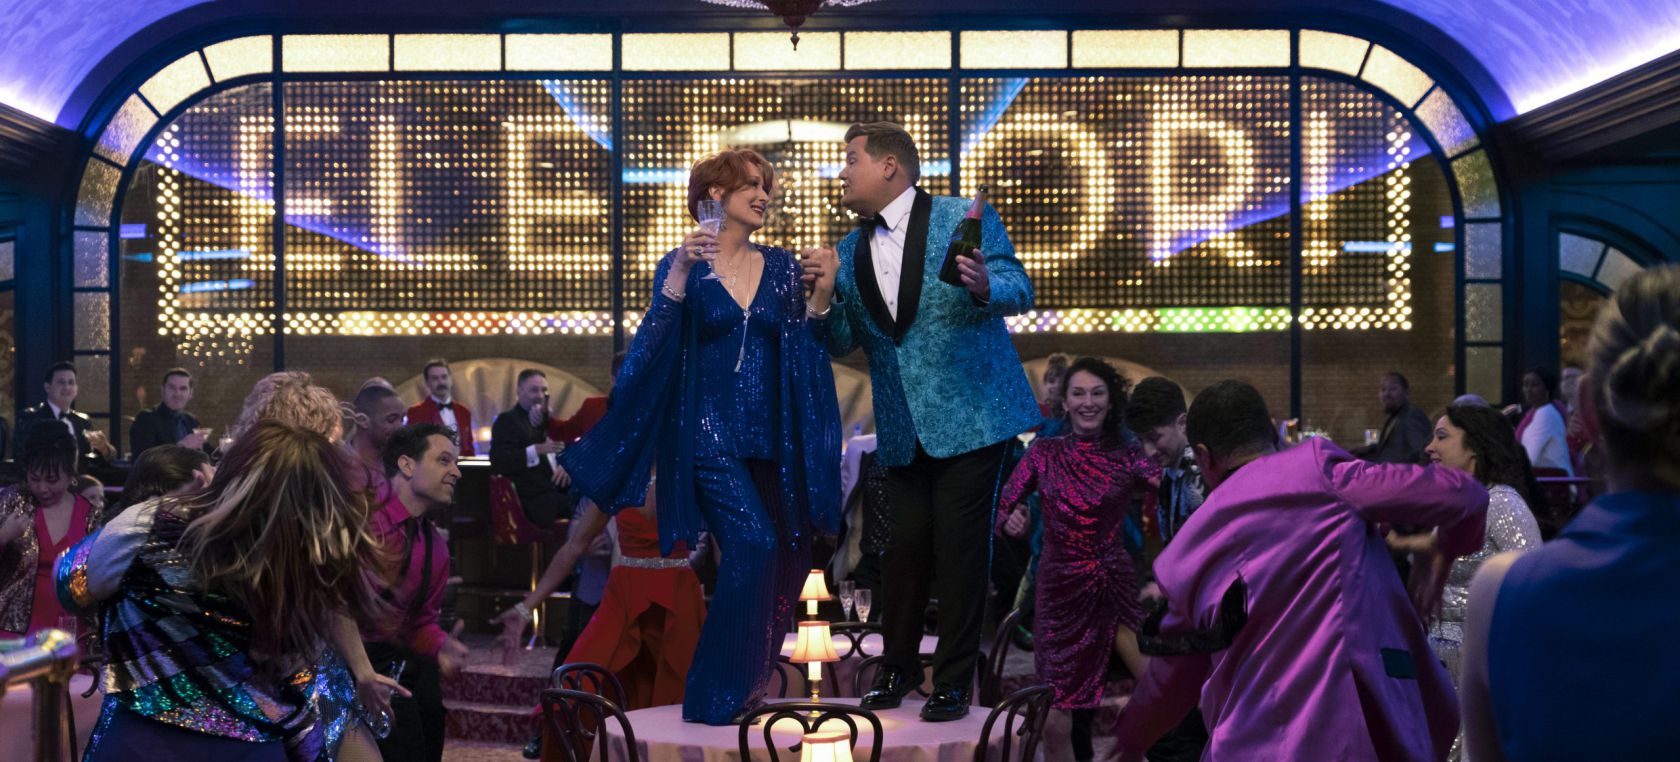 The Prom estreno musical Netflix Meryl Streep y Nicole Kidman